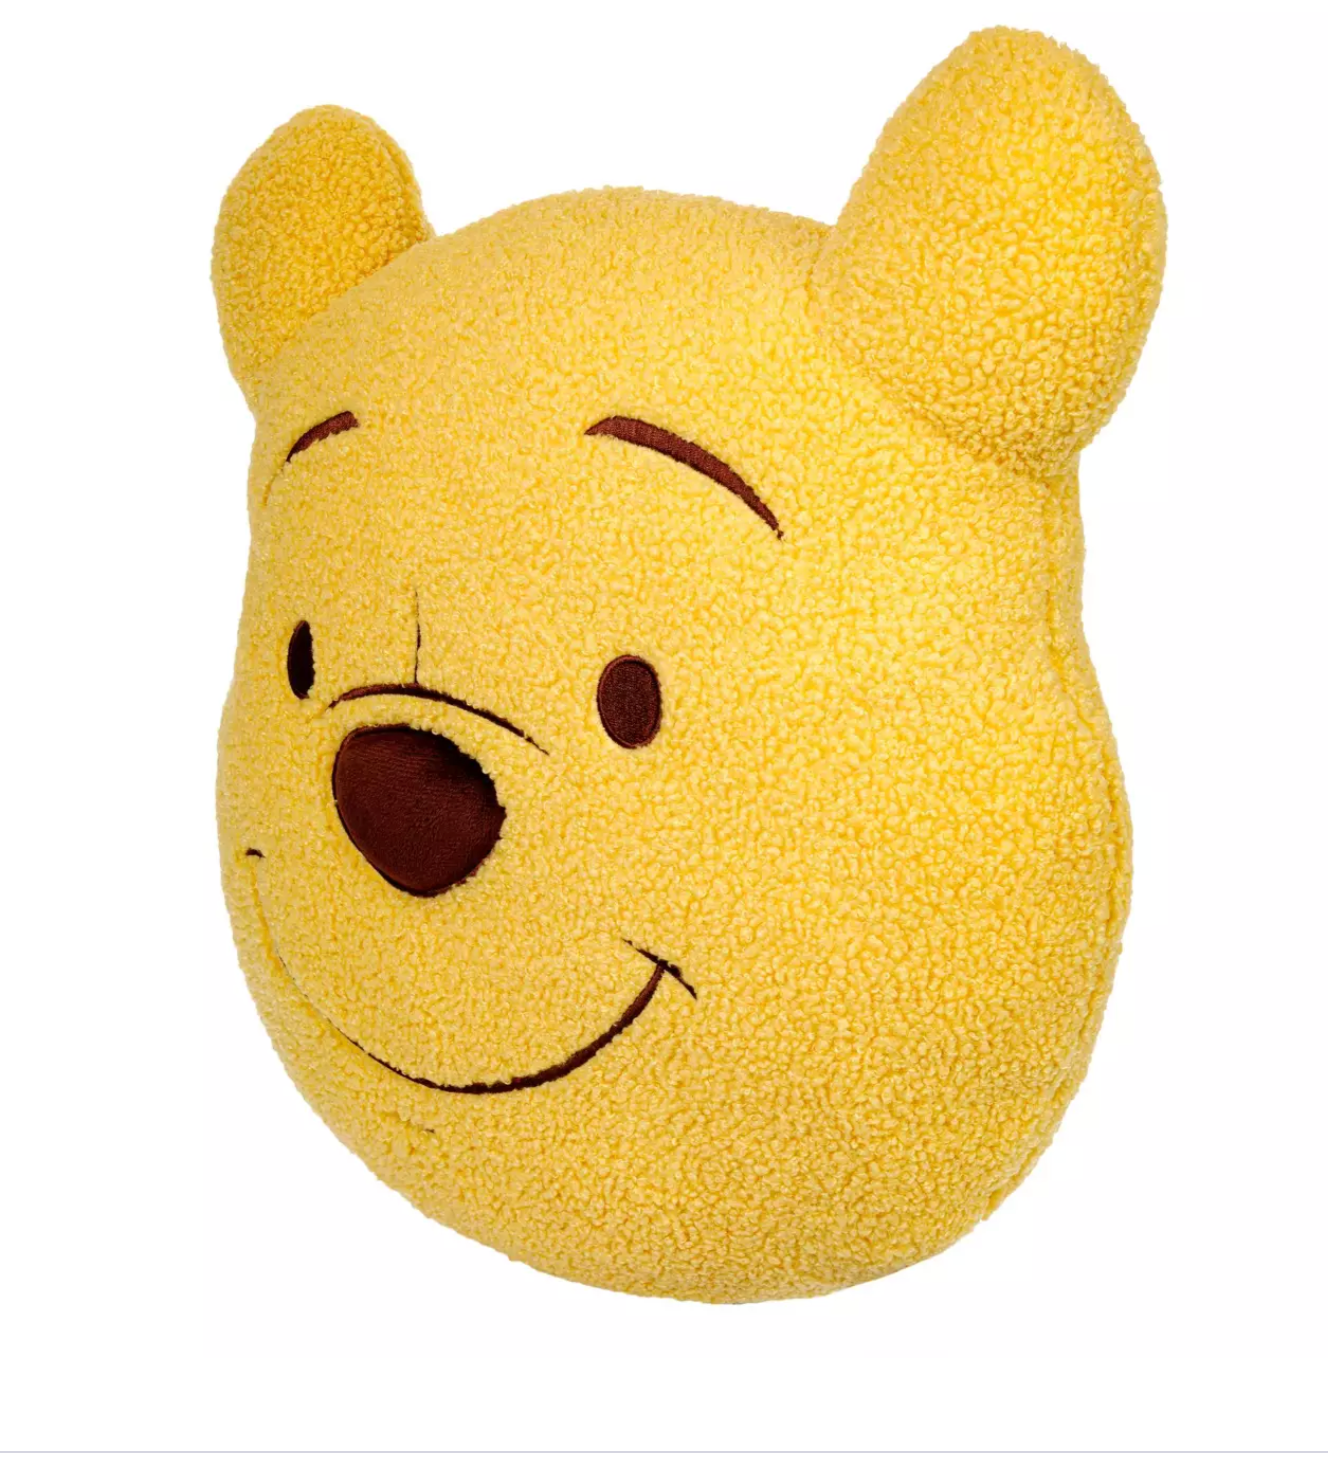 Disney Parks Winnie the Pooh Nostalgia Collection Plush Pillow New with Tag